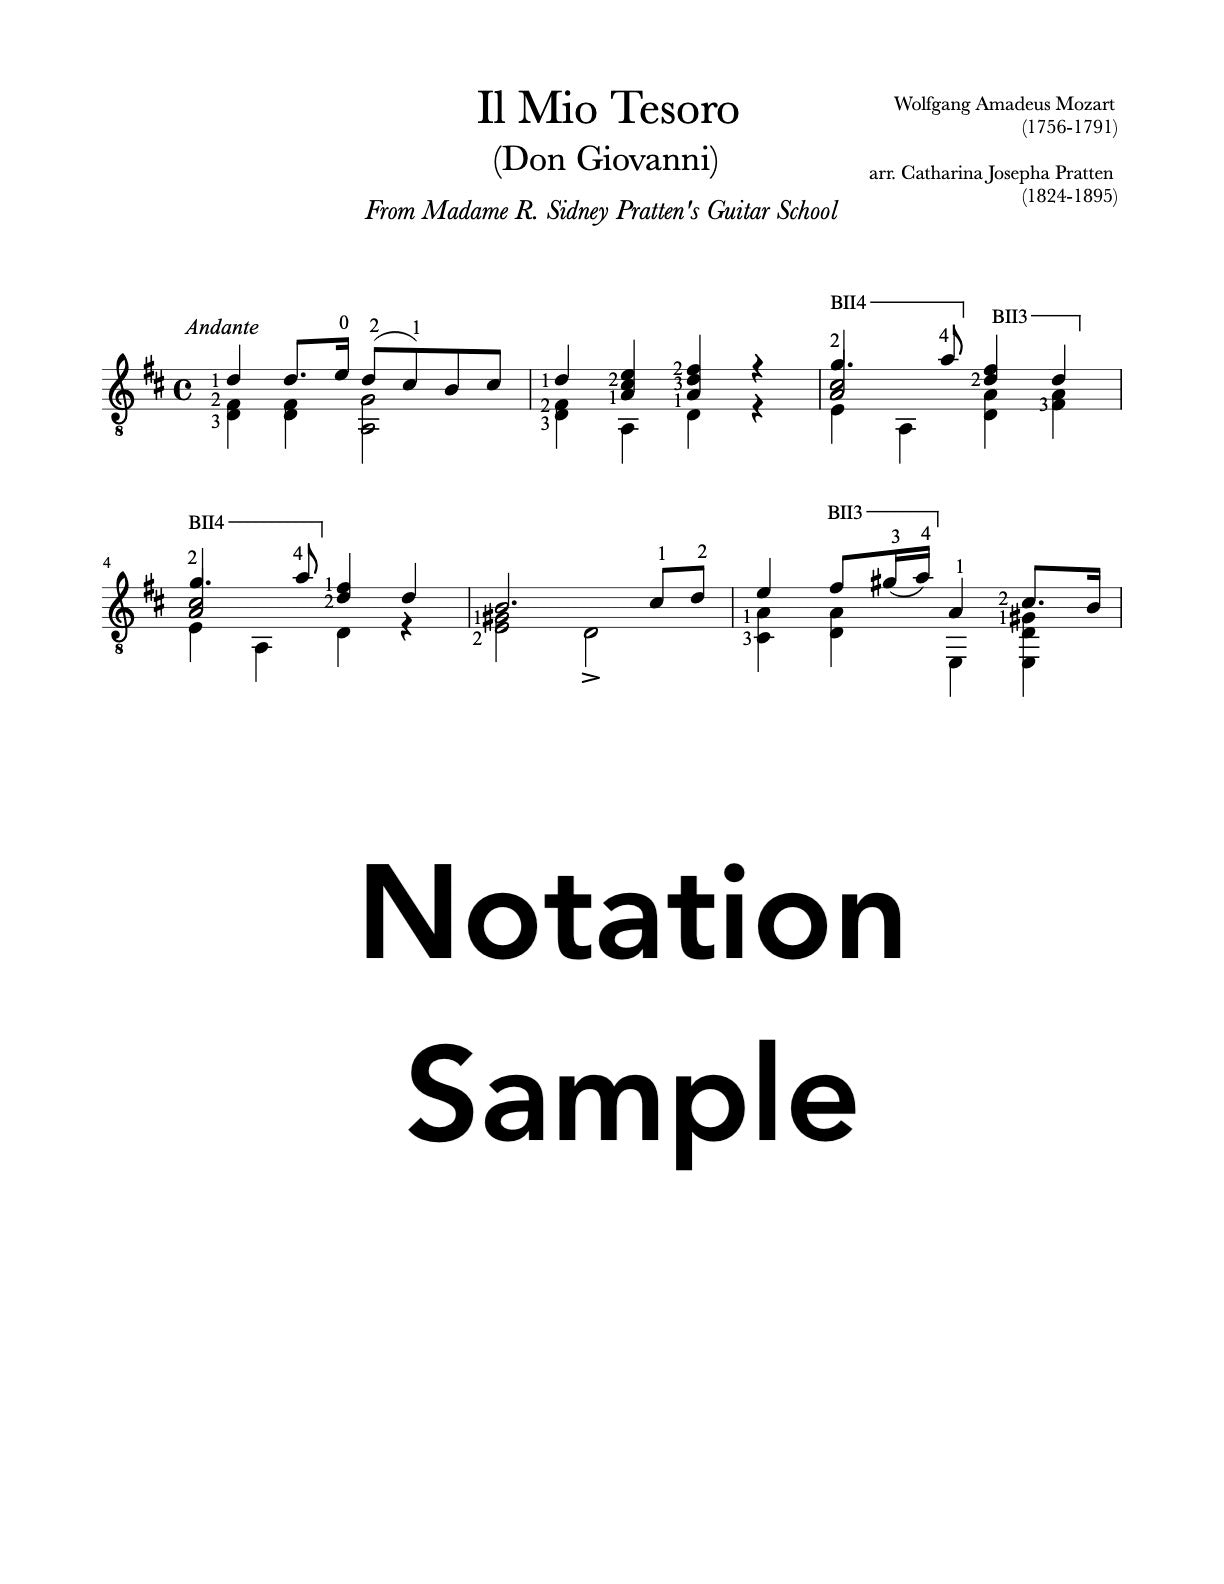 Il Mio Tesoro by Mozart, arr. Pratten (PDF) - Notation Sample